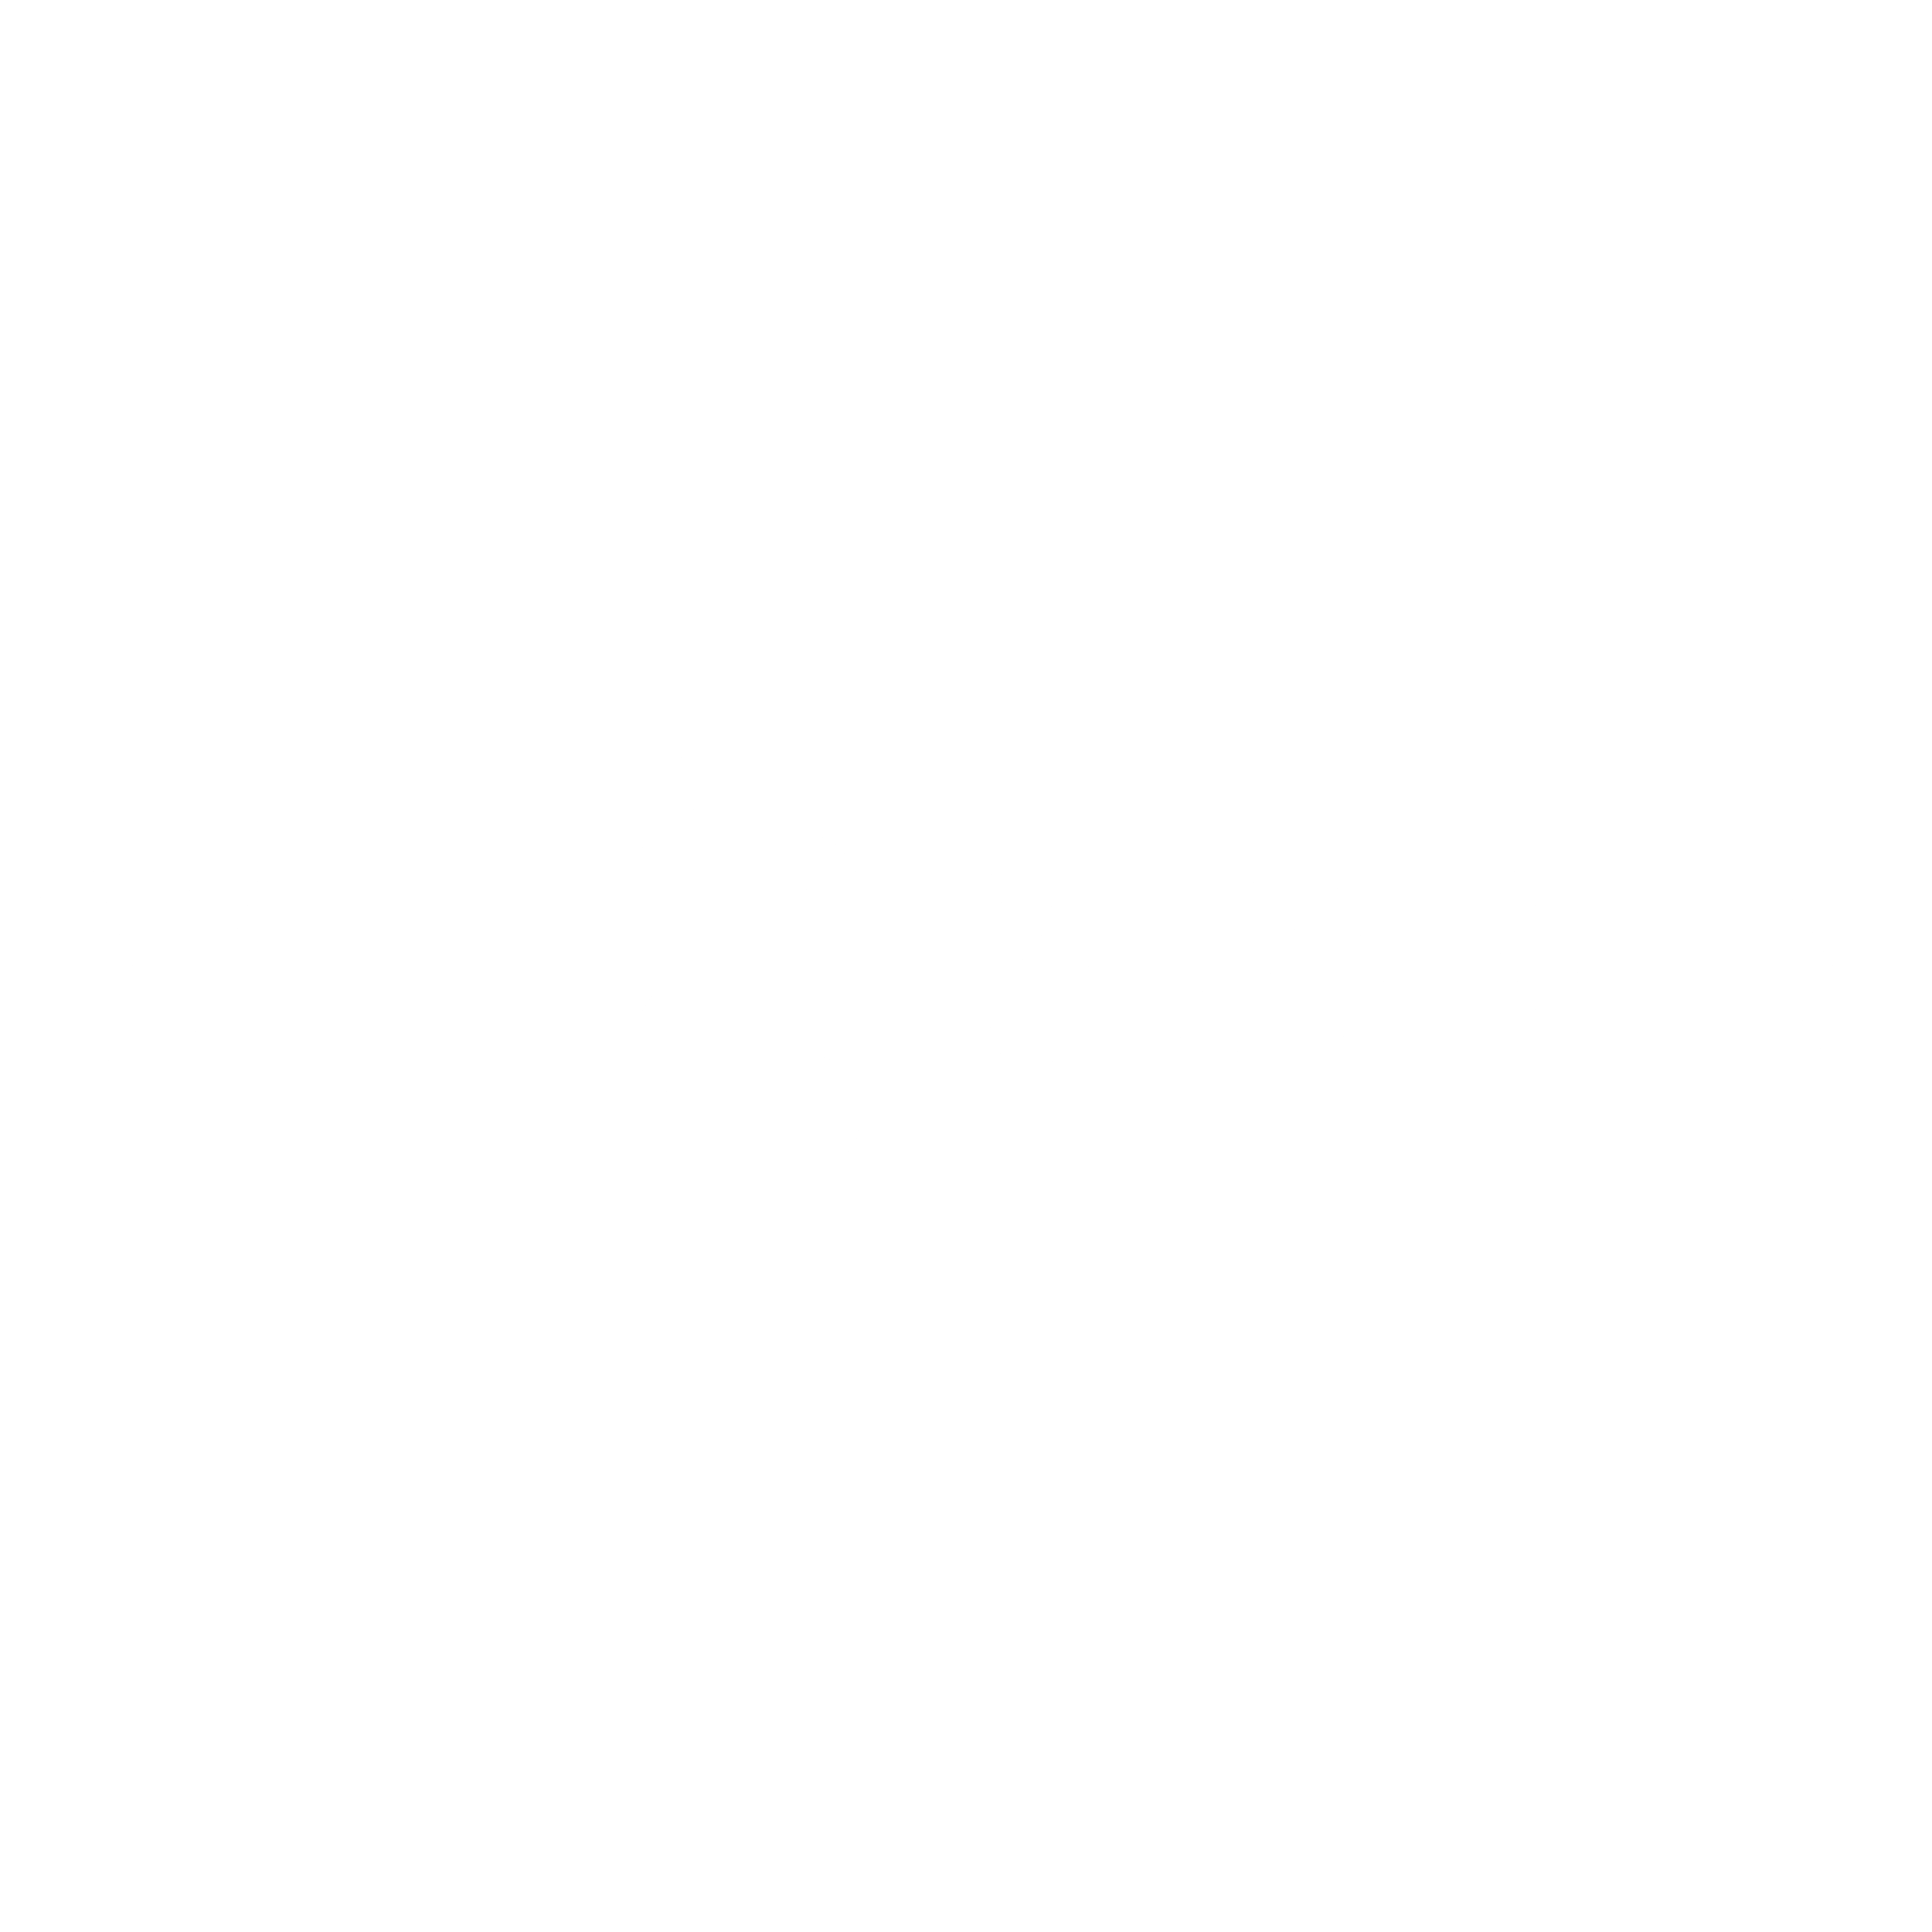 Viessmann Logo - Viessmann Logo PNG Transparent & SVG Vector - Freebie Supply